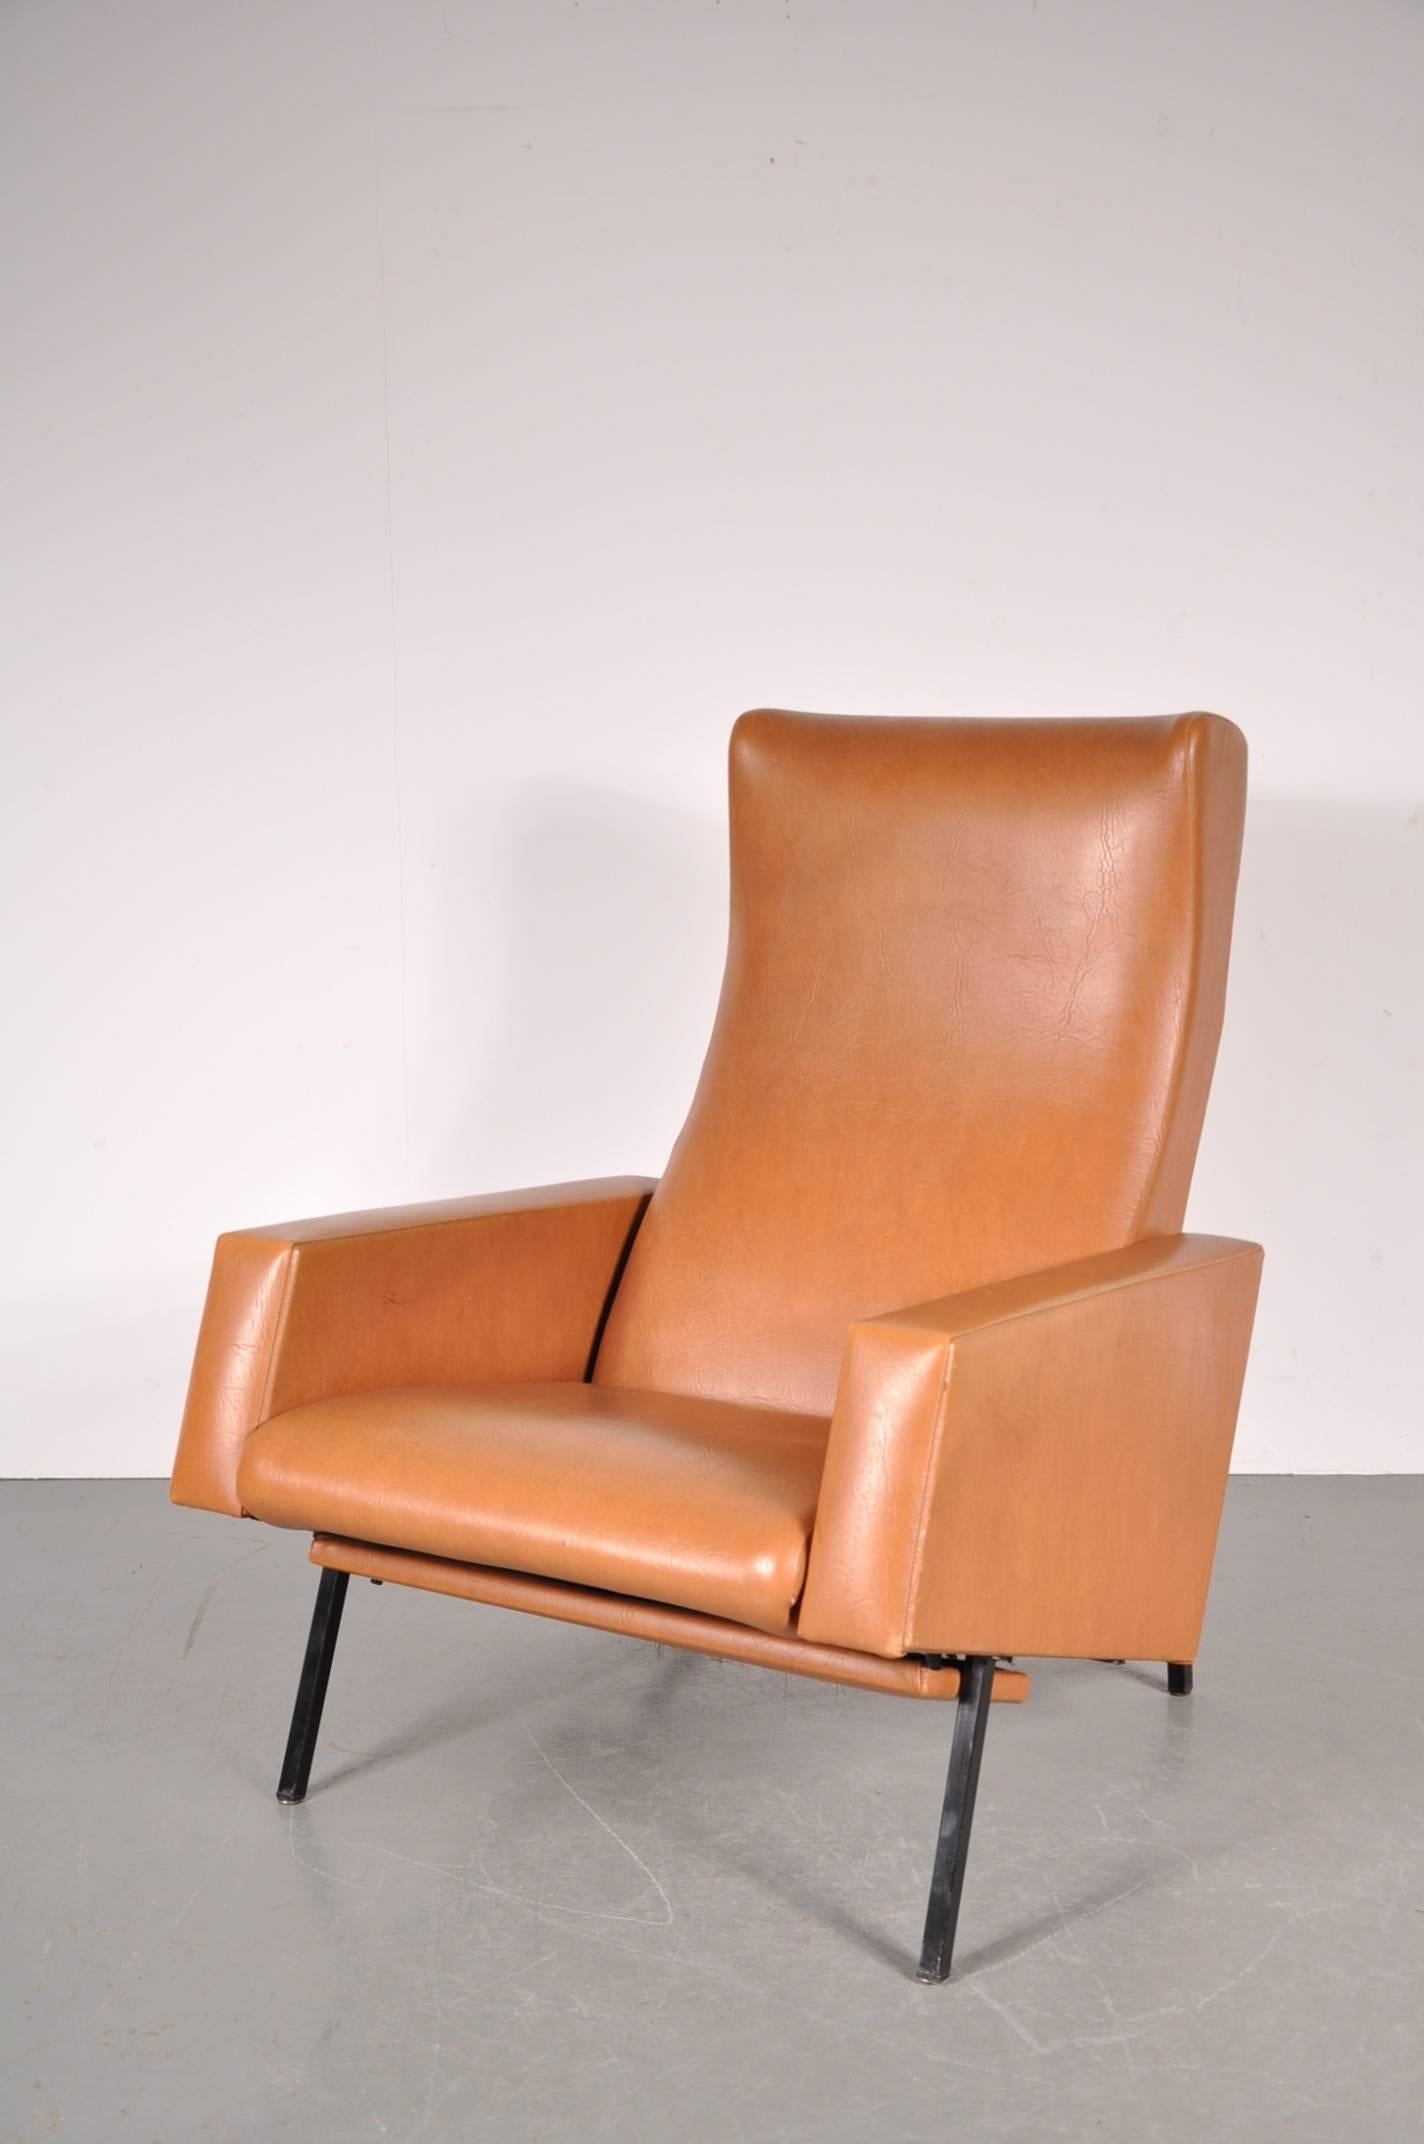 Beautiful easy chair by Pierre Guariche, model 